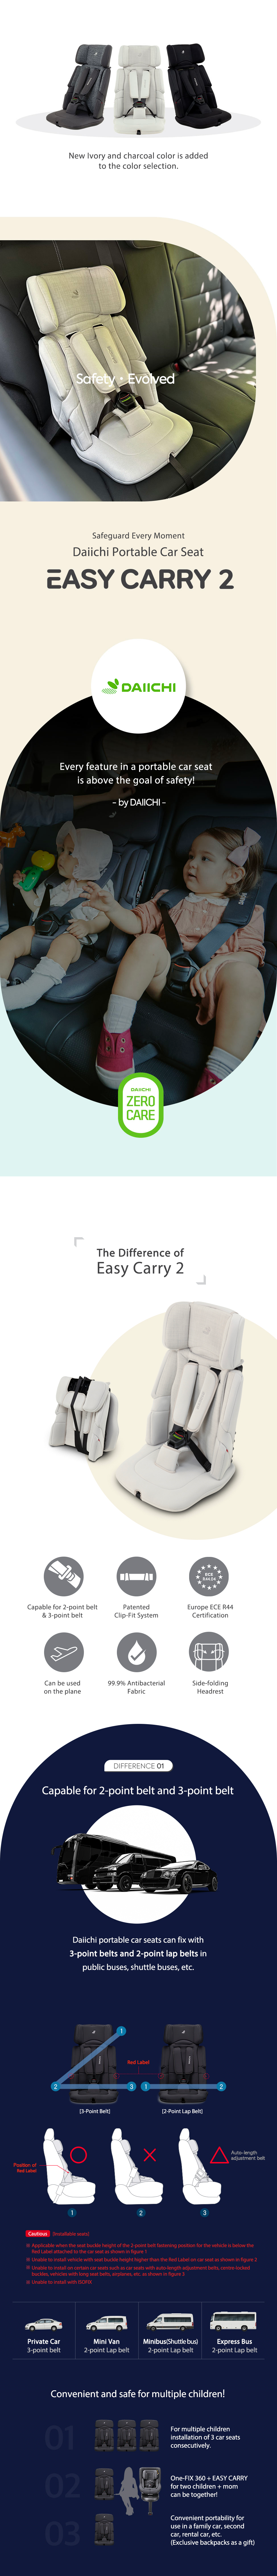 Daiichi Easy Carry 2 Product Info